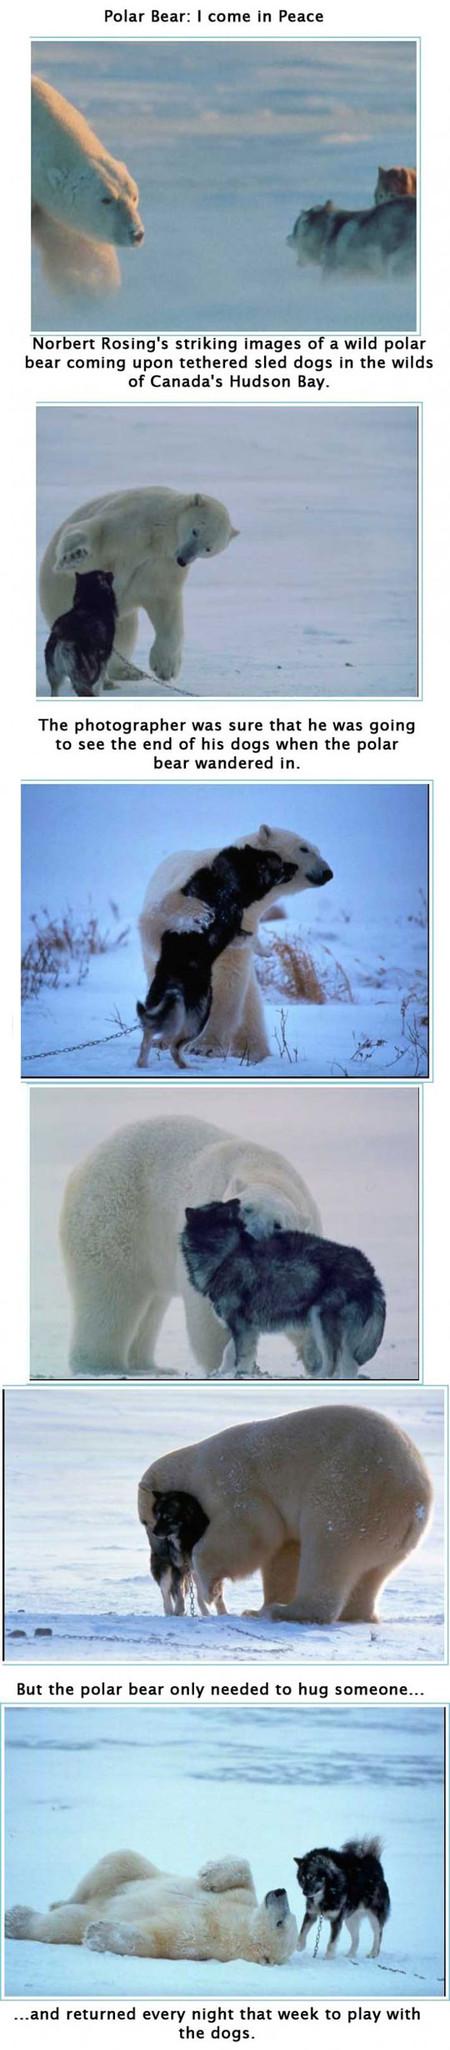 Polar Bear comes in peace.